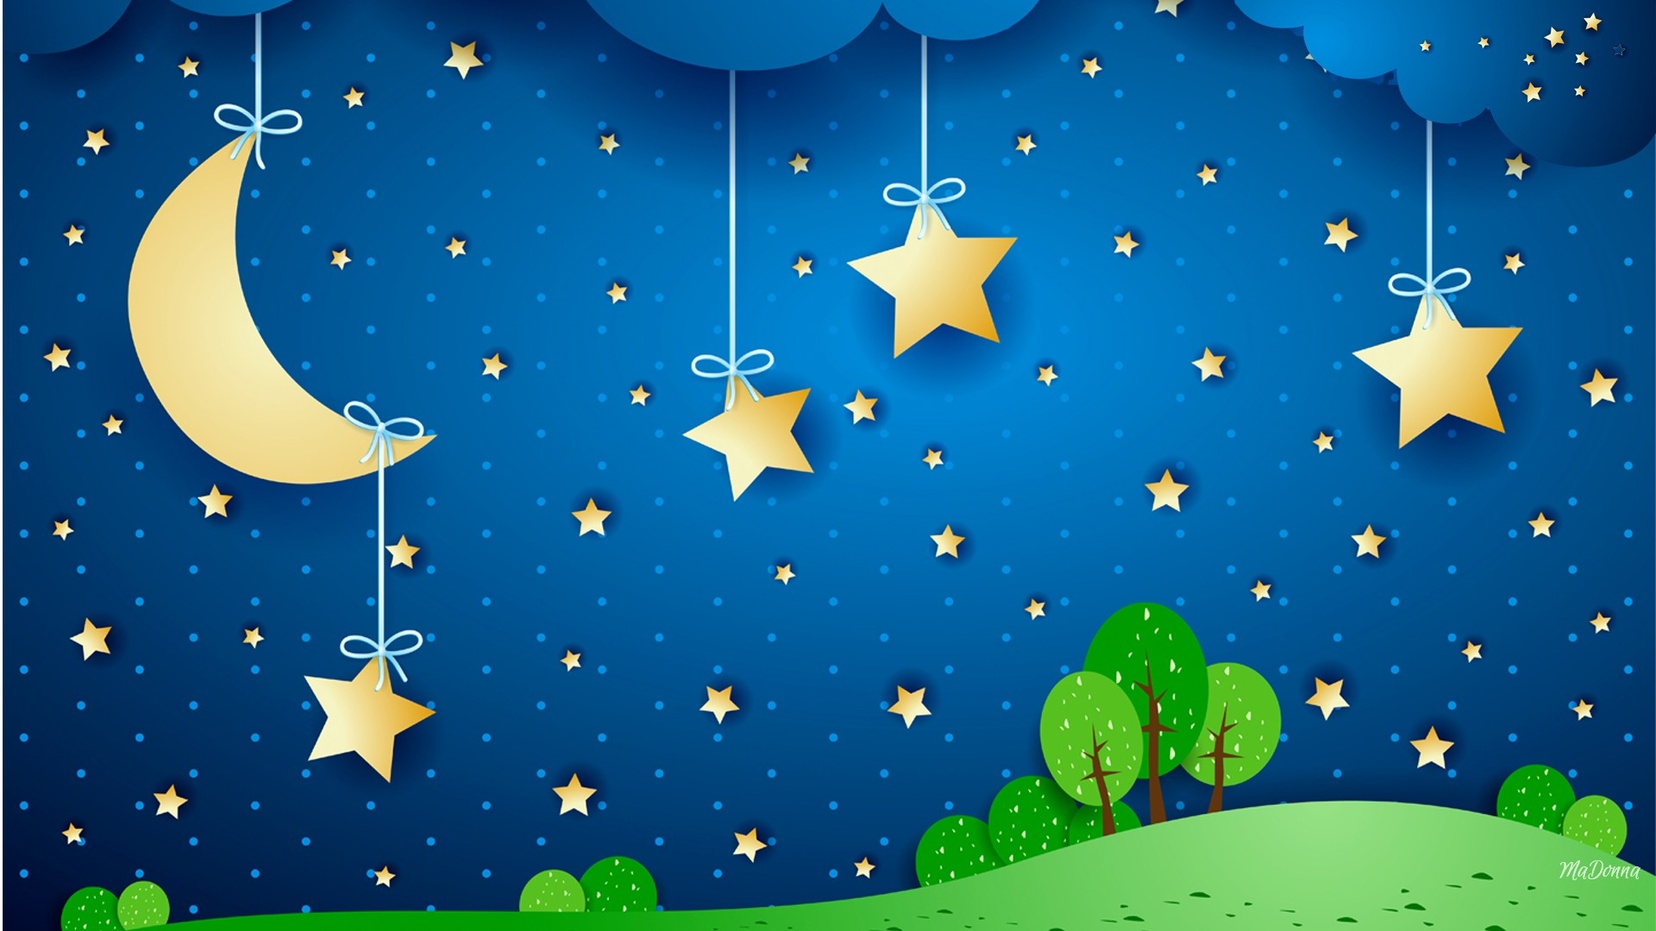 Twinkl Twinkle Little Star HD Wallpaper And Image